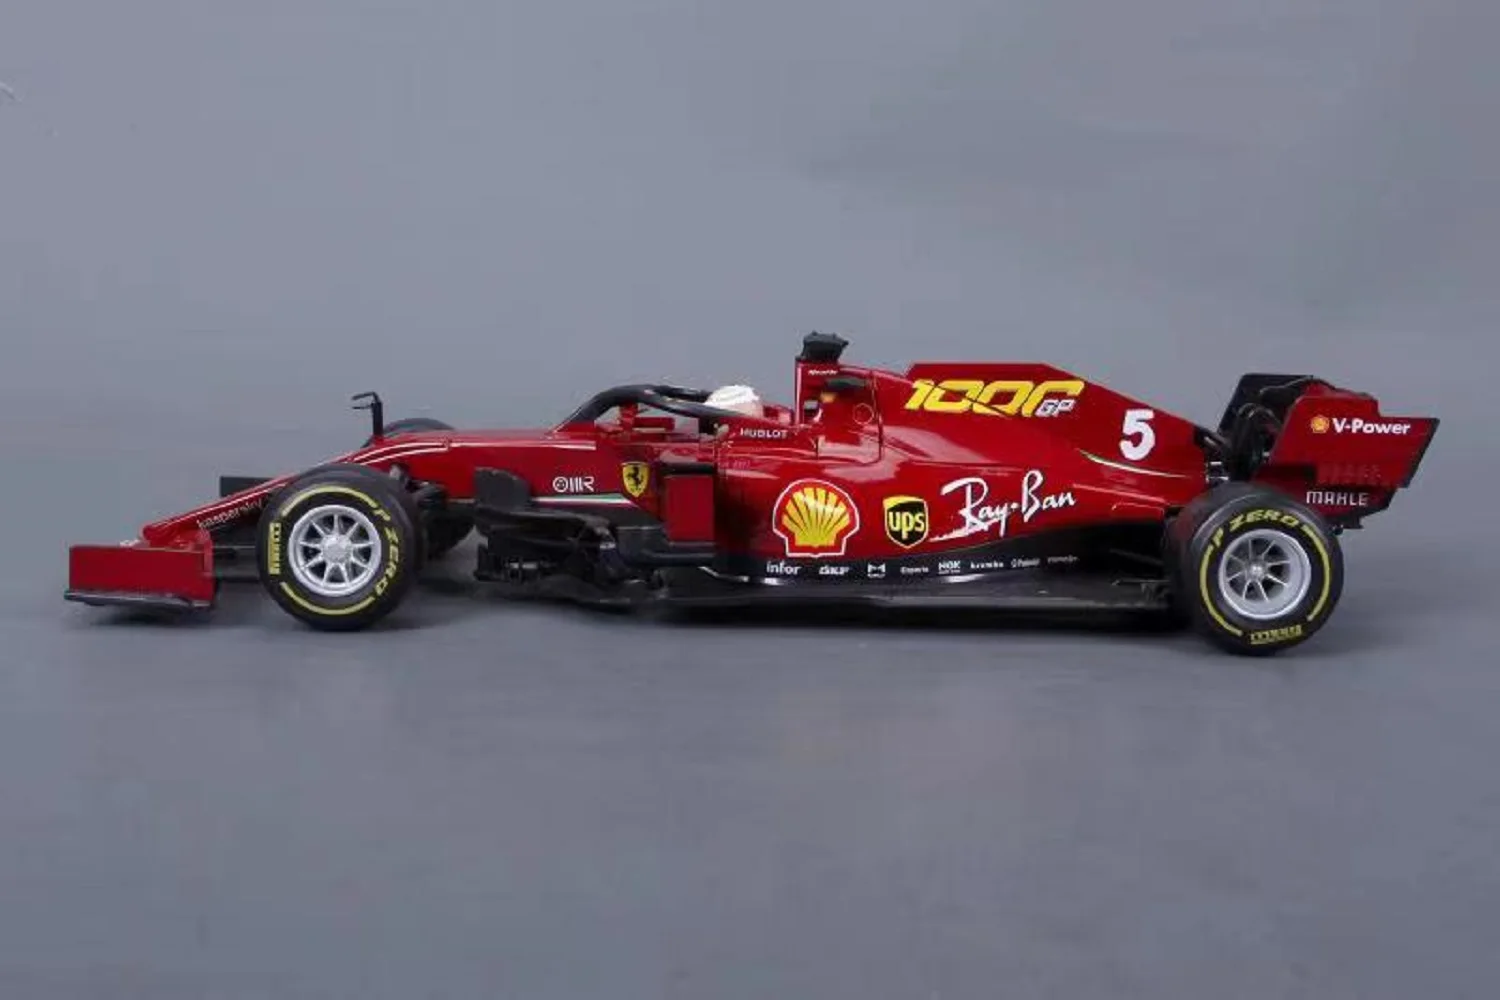 Bburago 1:18 F1 2020 Ferrari SF1000 #5 Sebastian Vettel #16 Charles Leclerc Diecast Model Auta, Nové v Krabici